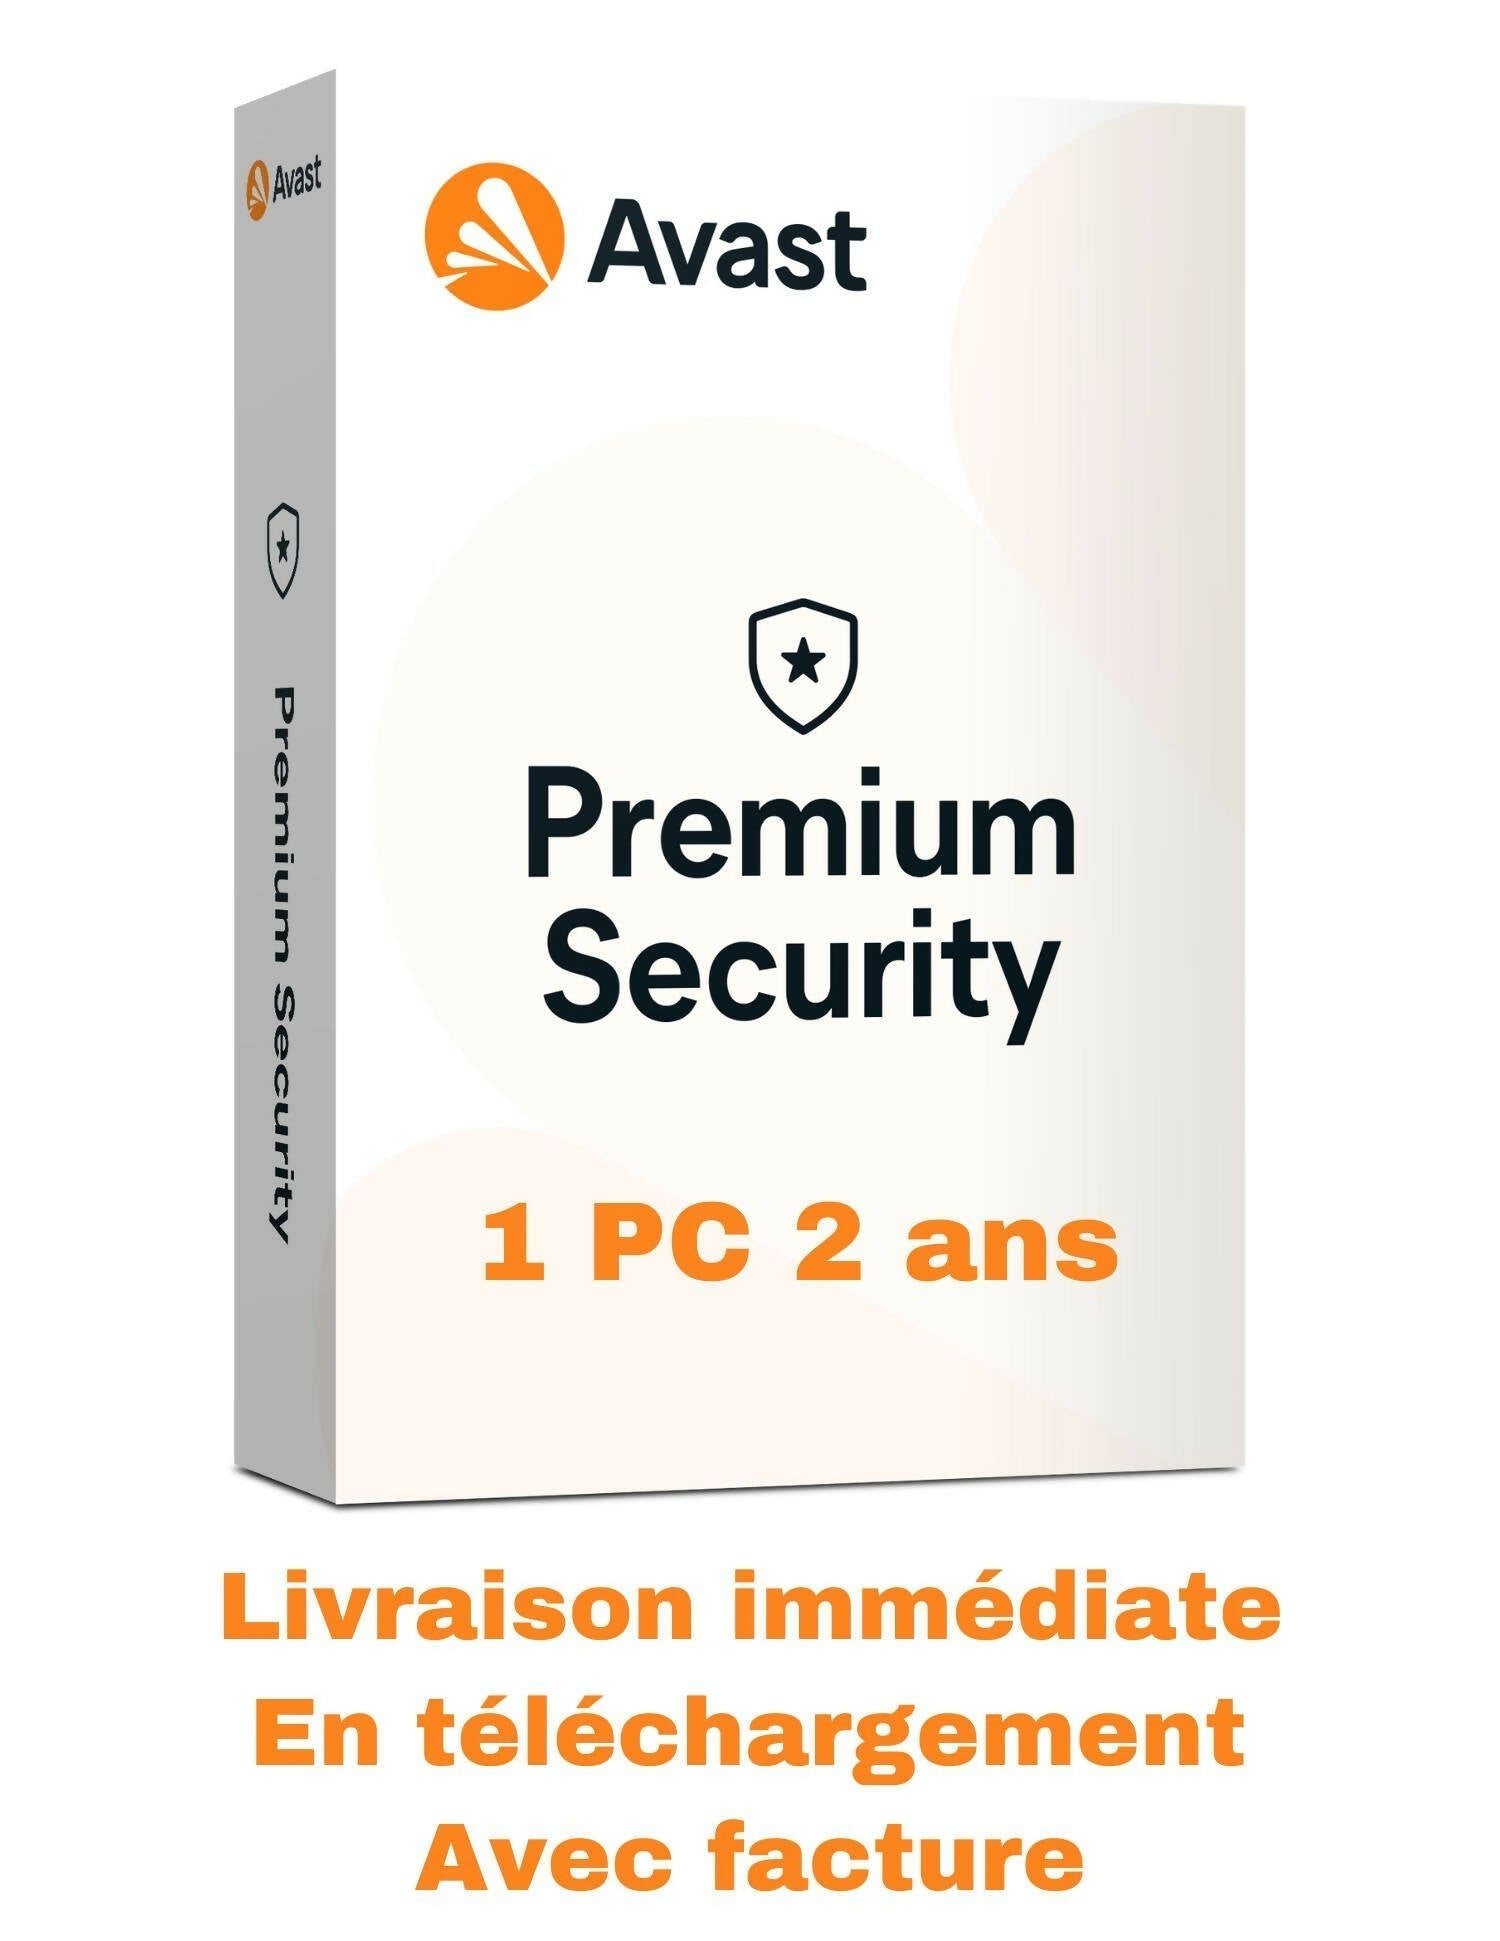 Avast Premium Security 1 PC 2 ans clicktofournisseur.com